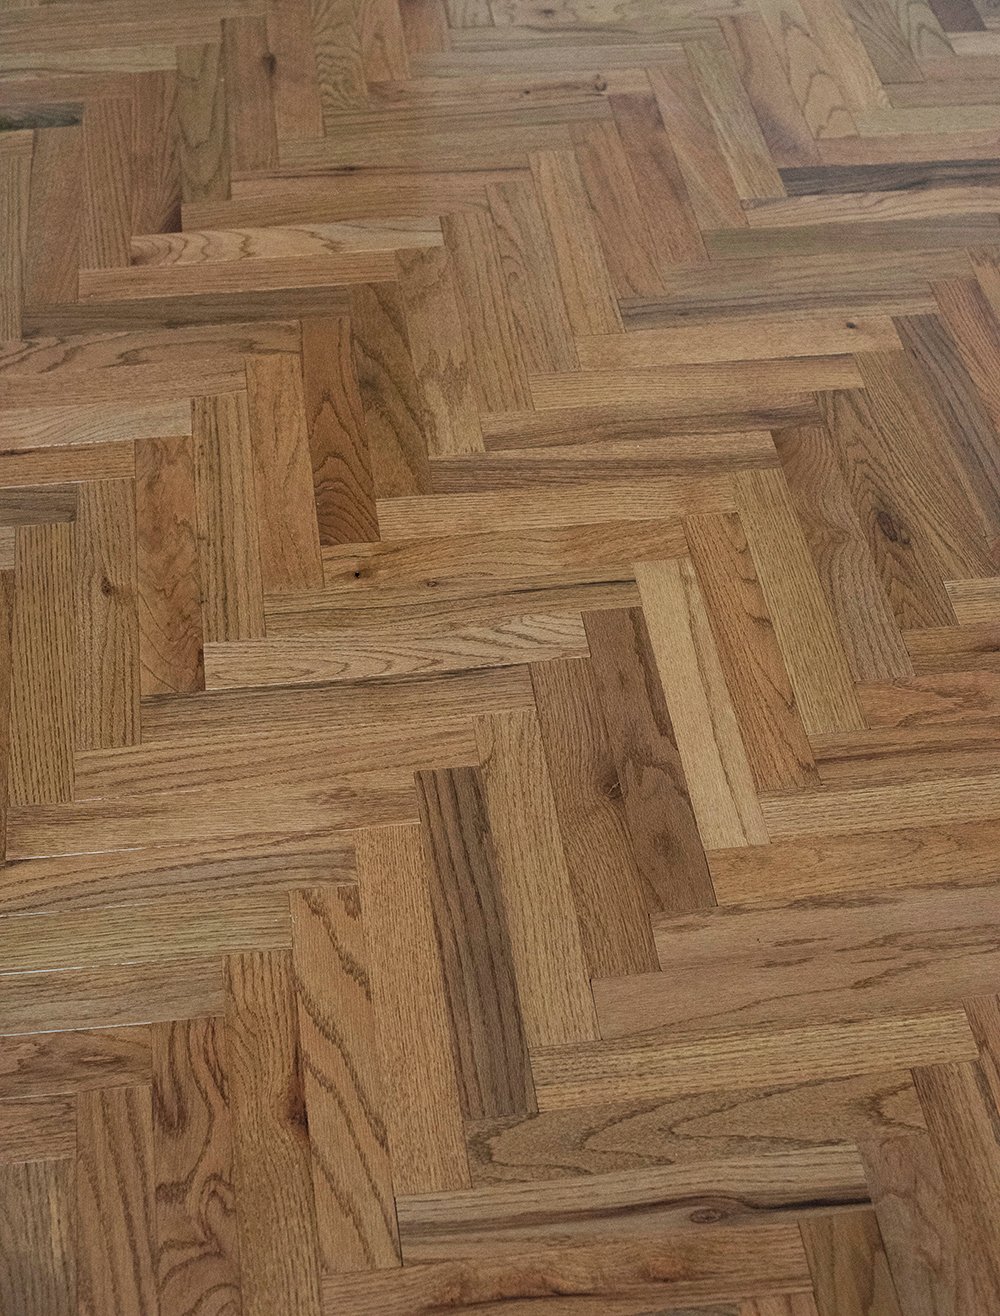 Install Herringbone Hardwood Flooring, How To Install Hardwood Flooring Patterns